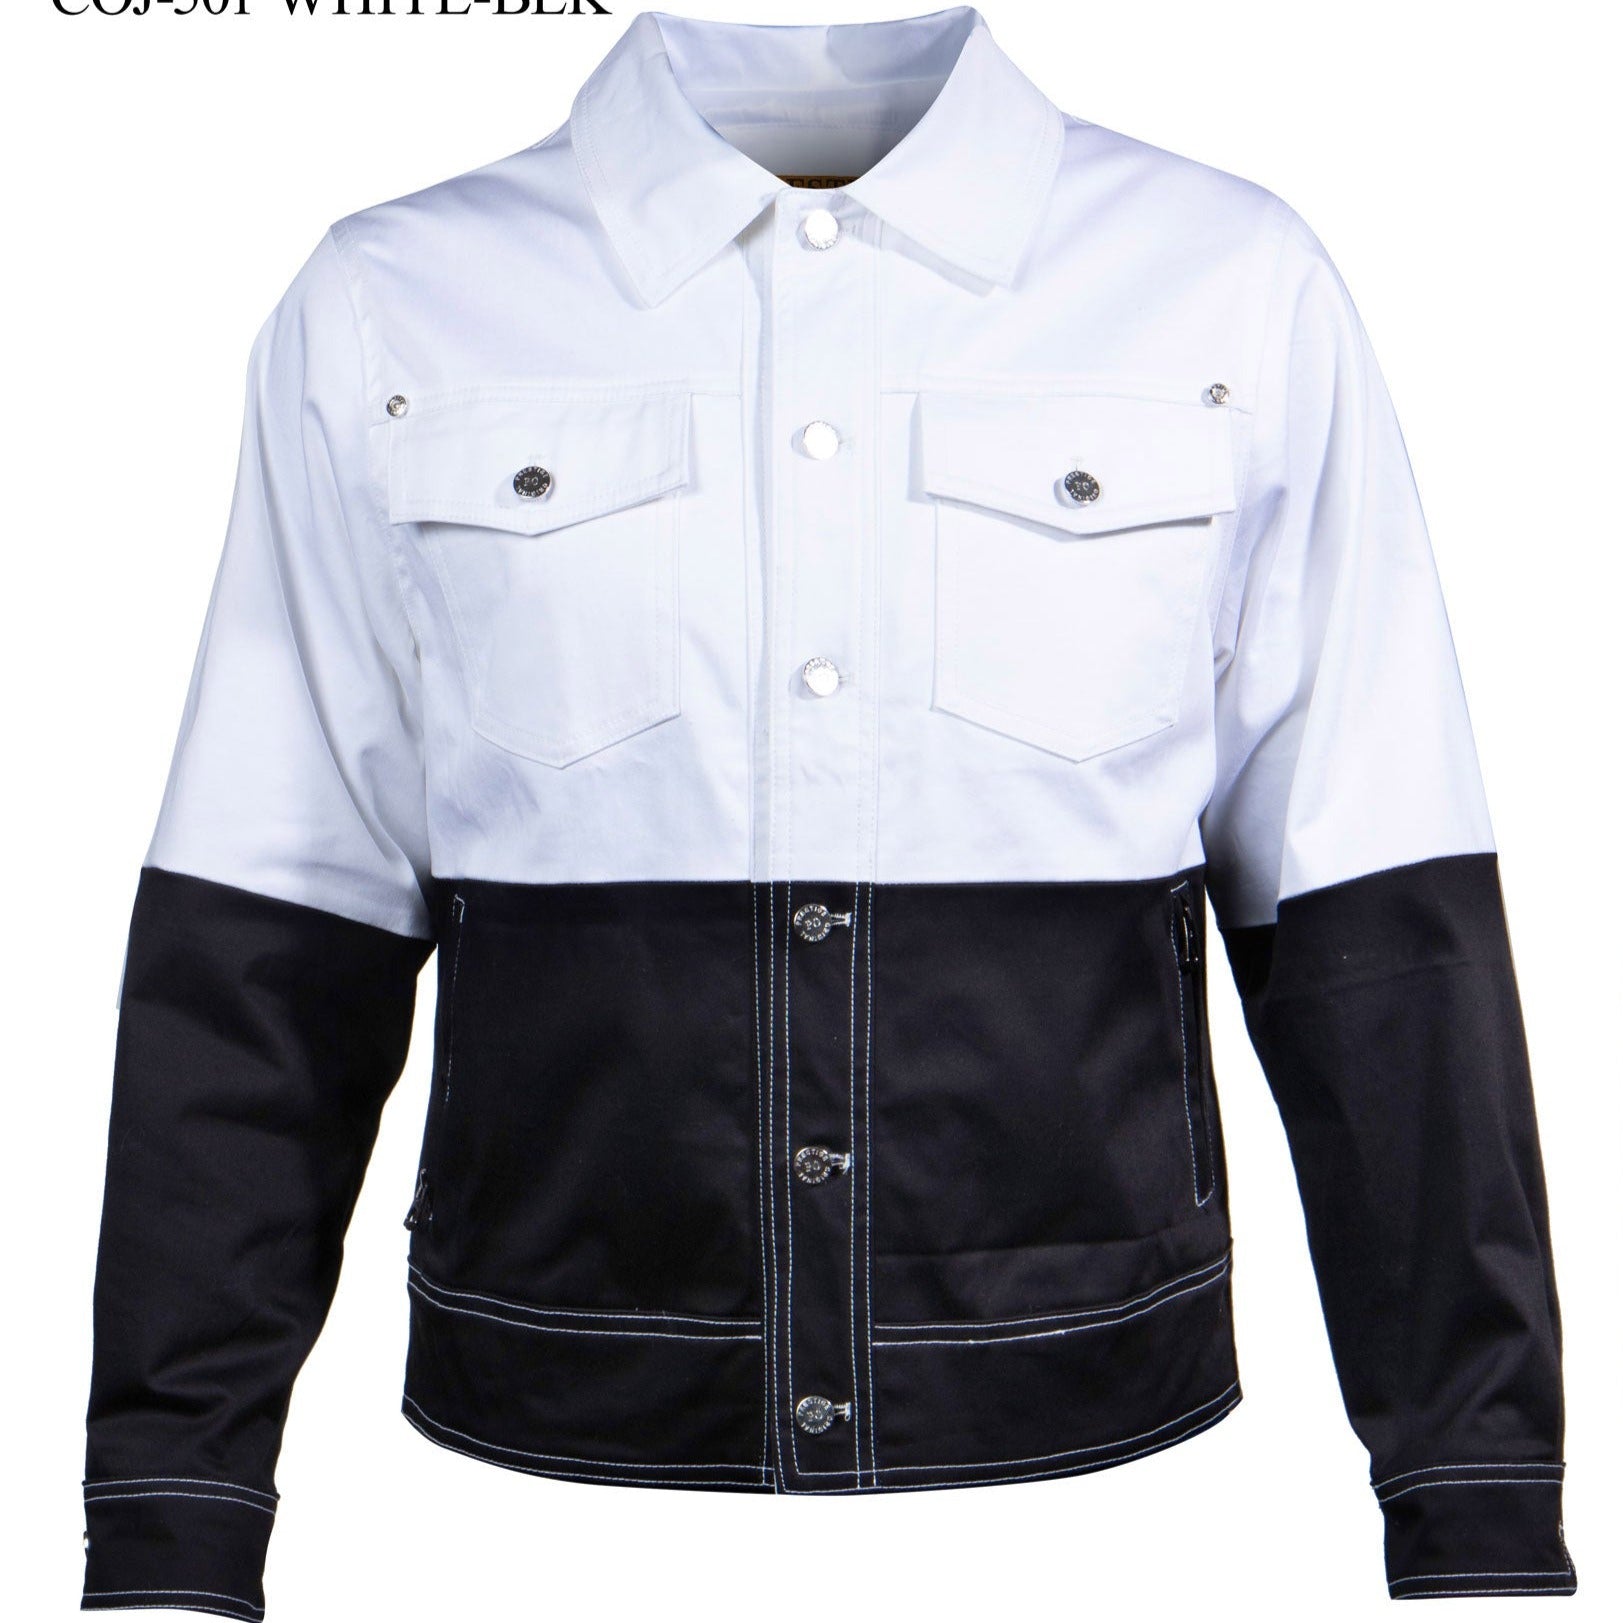 Prestige White/Black Double Stitched Jacket